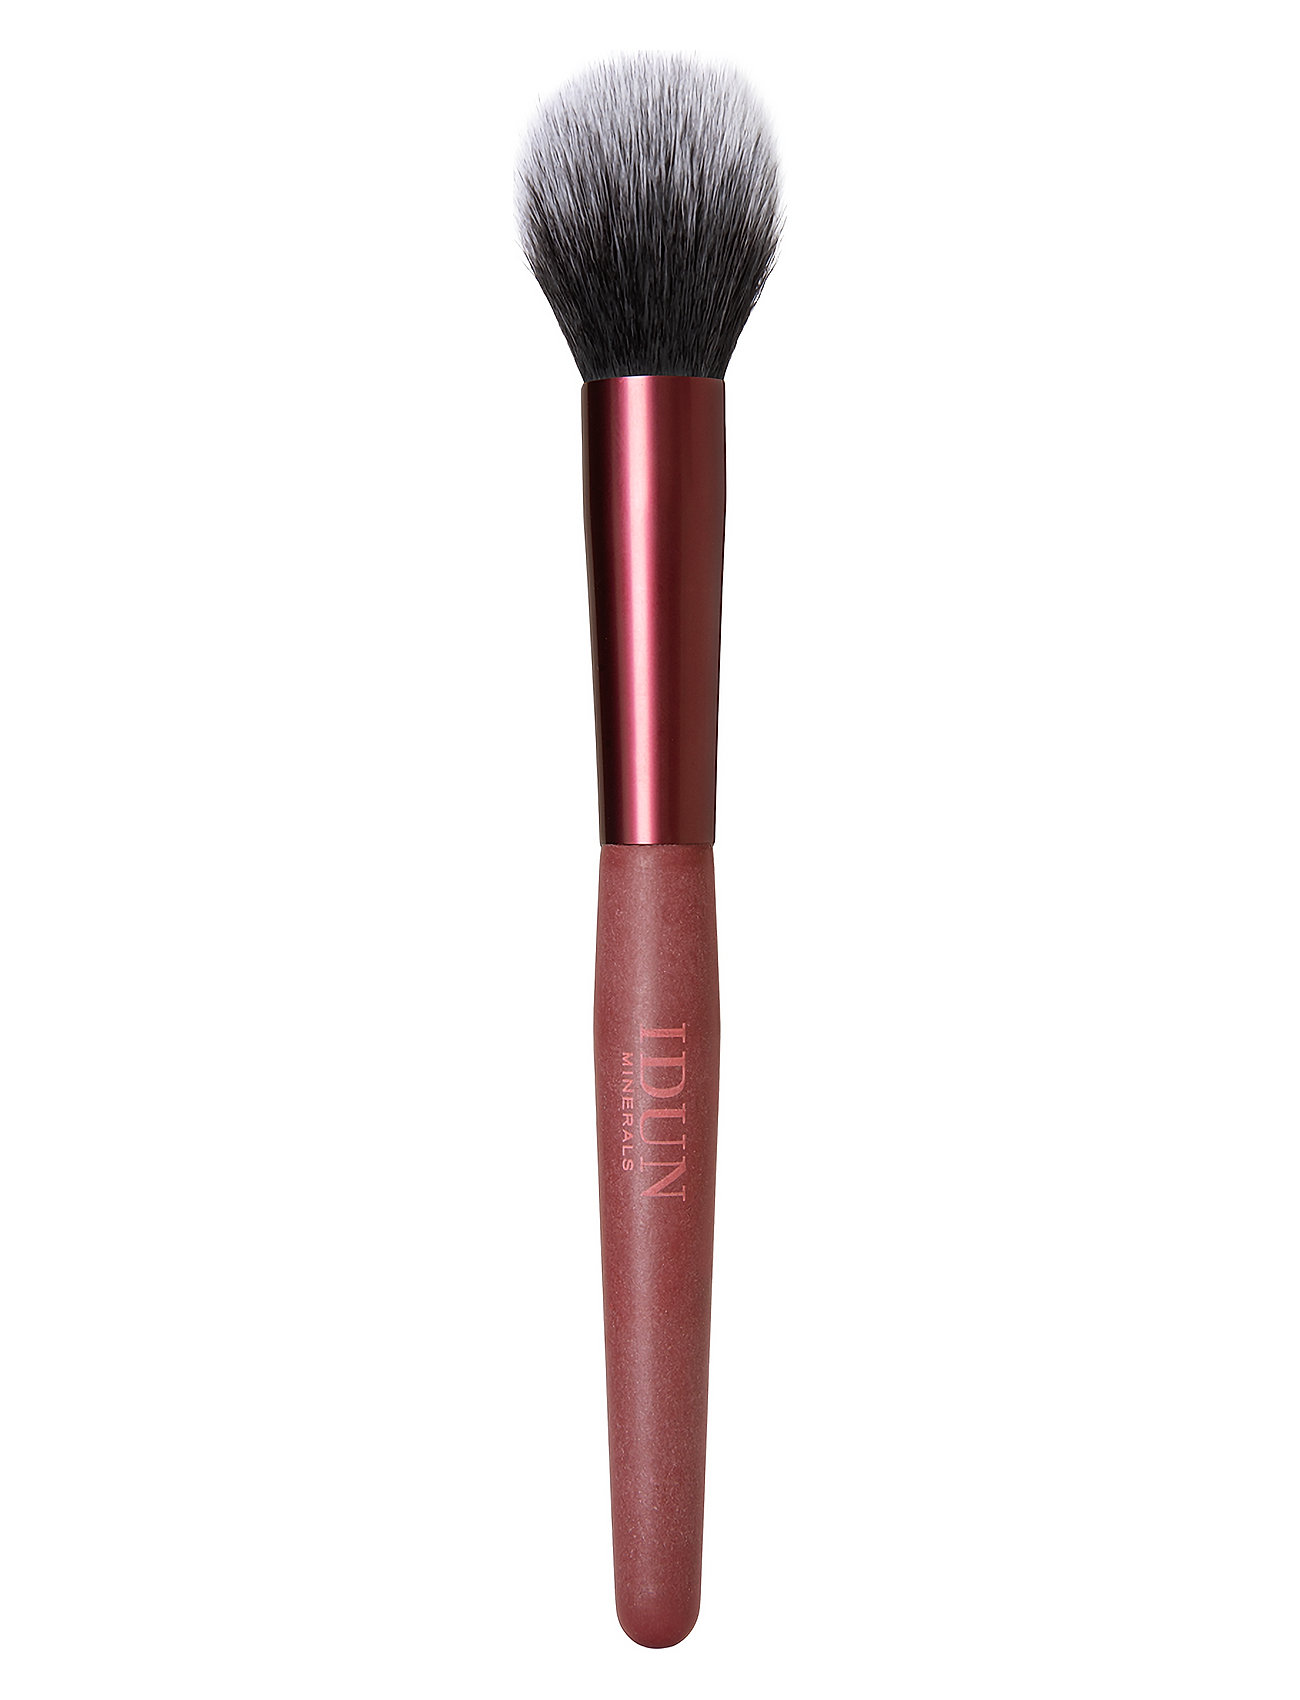 Pro Tapered Powder Brush Beauty Women Makeup Makeup Brushes Face Brushes Powder Brushes Nude IDUN Minerals